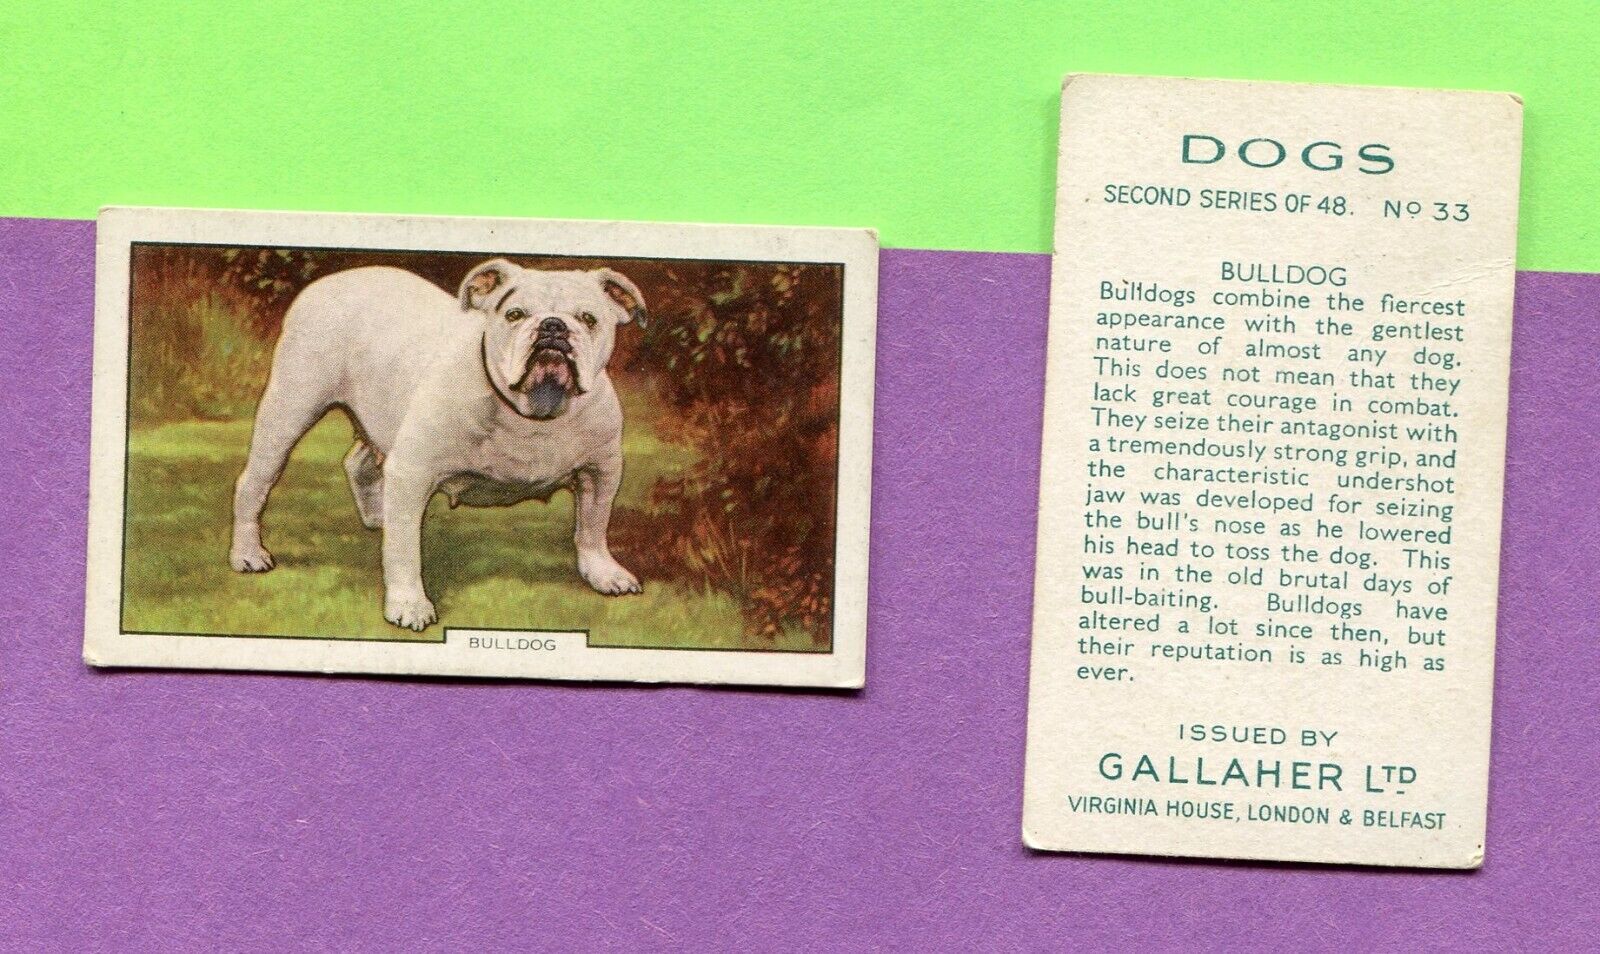 1938 GALLAHER LTD CIGARETTES DOGS SERIES 2 #33 BULLDOG TOBACCO CARD